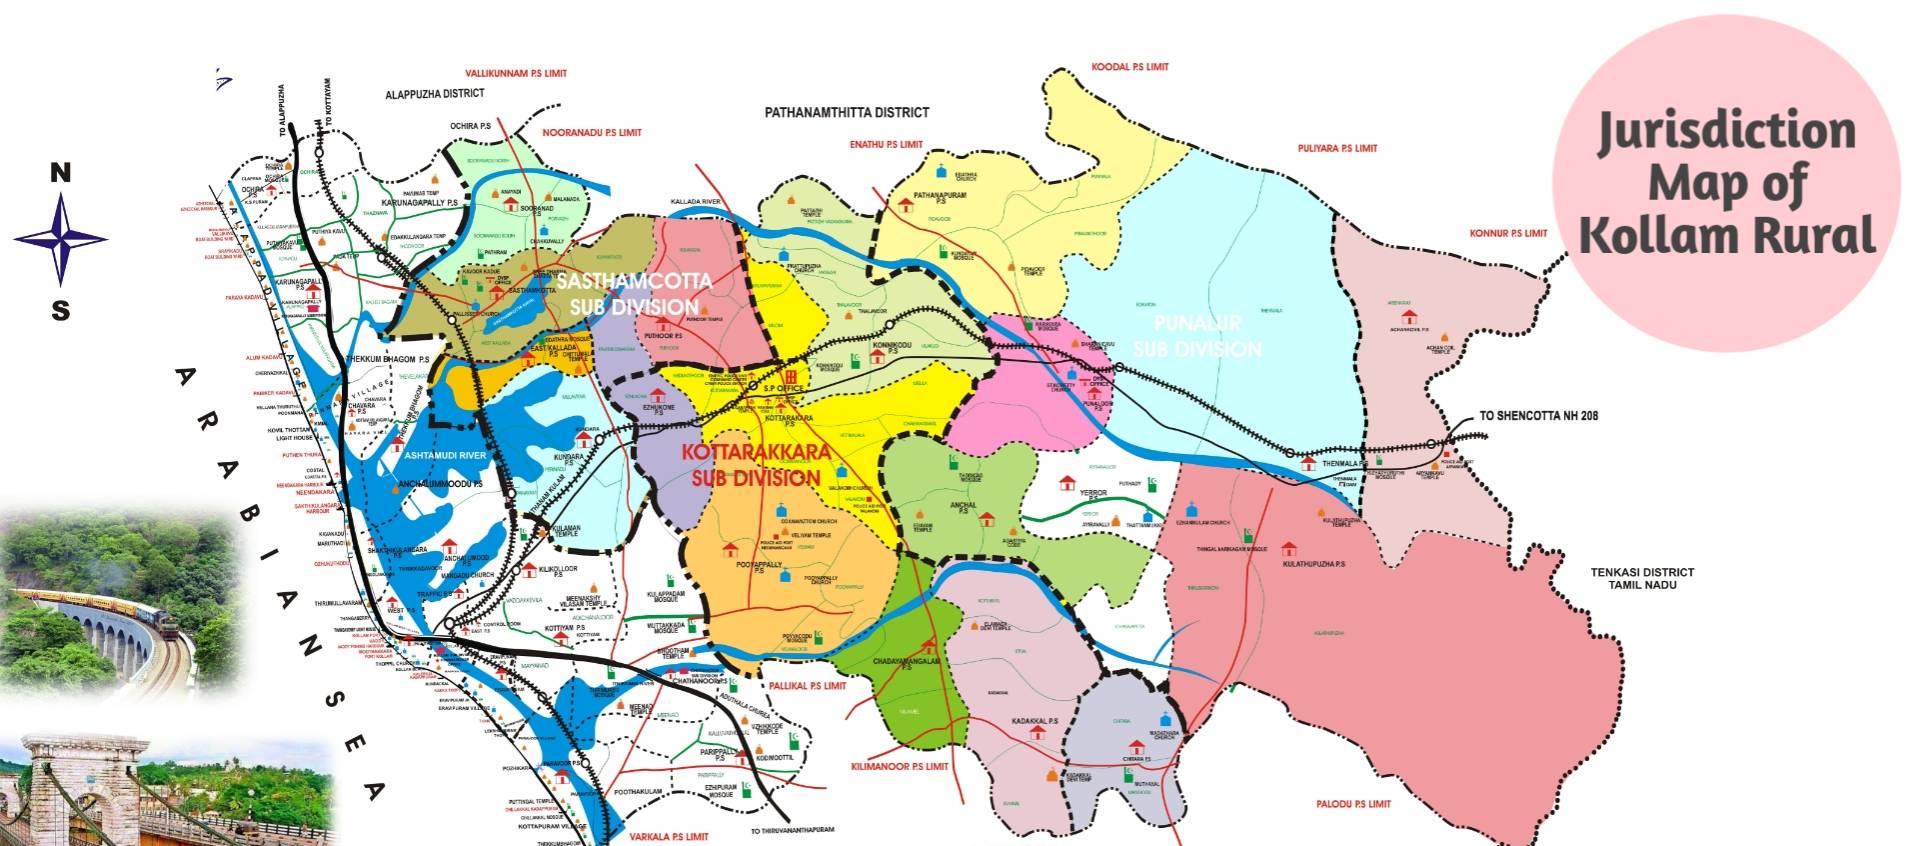 Jurisdiction map of Kollam Rural